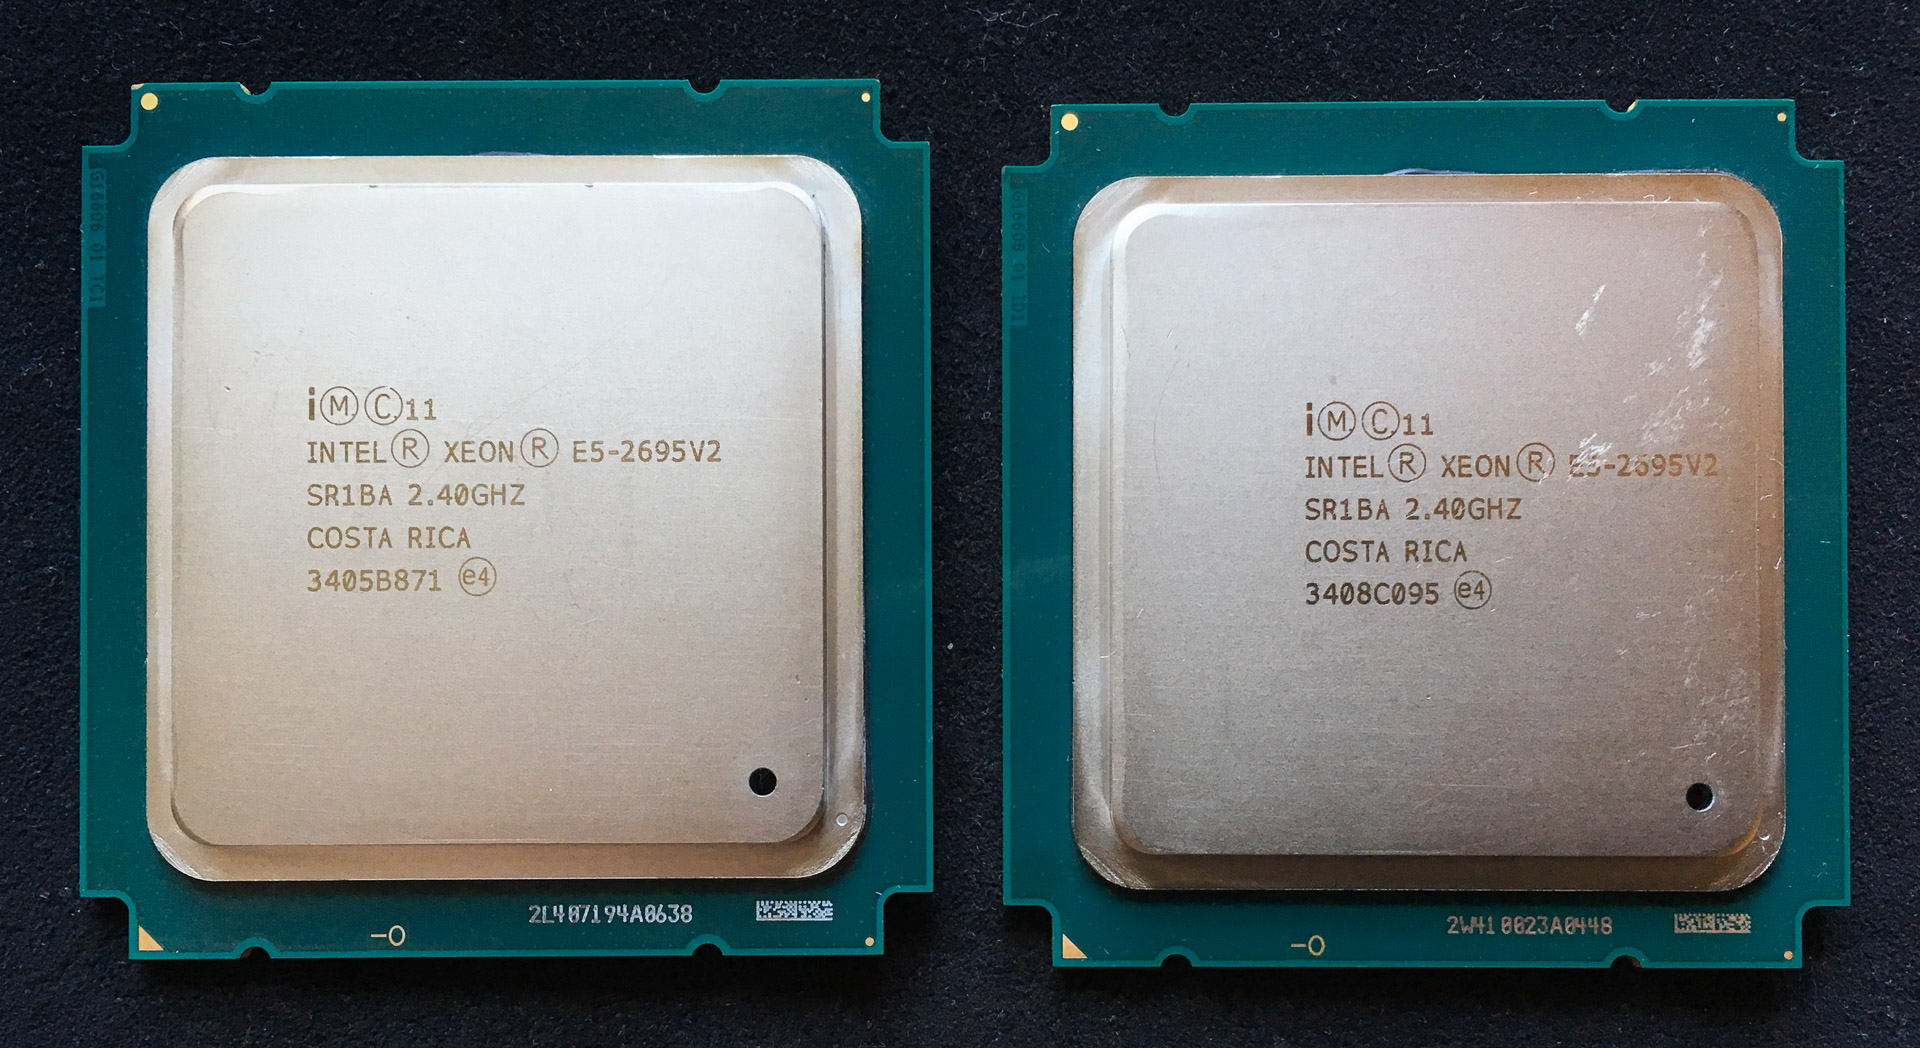 Intel xeon lga 2011 v4. Intel Xeon e5-2695v2. Процессор Intel Xeon e5-2695v2 lga2011. E5-2695 v2. Intel Xeon e5 2011 v2.